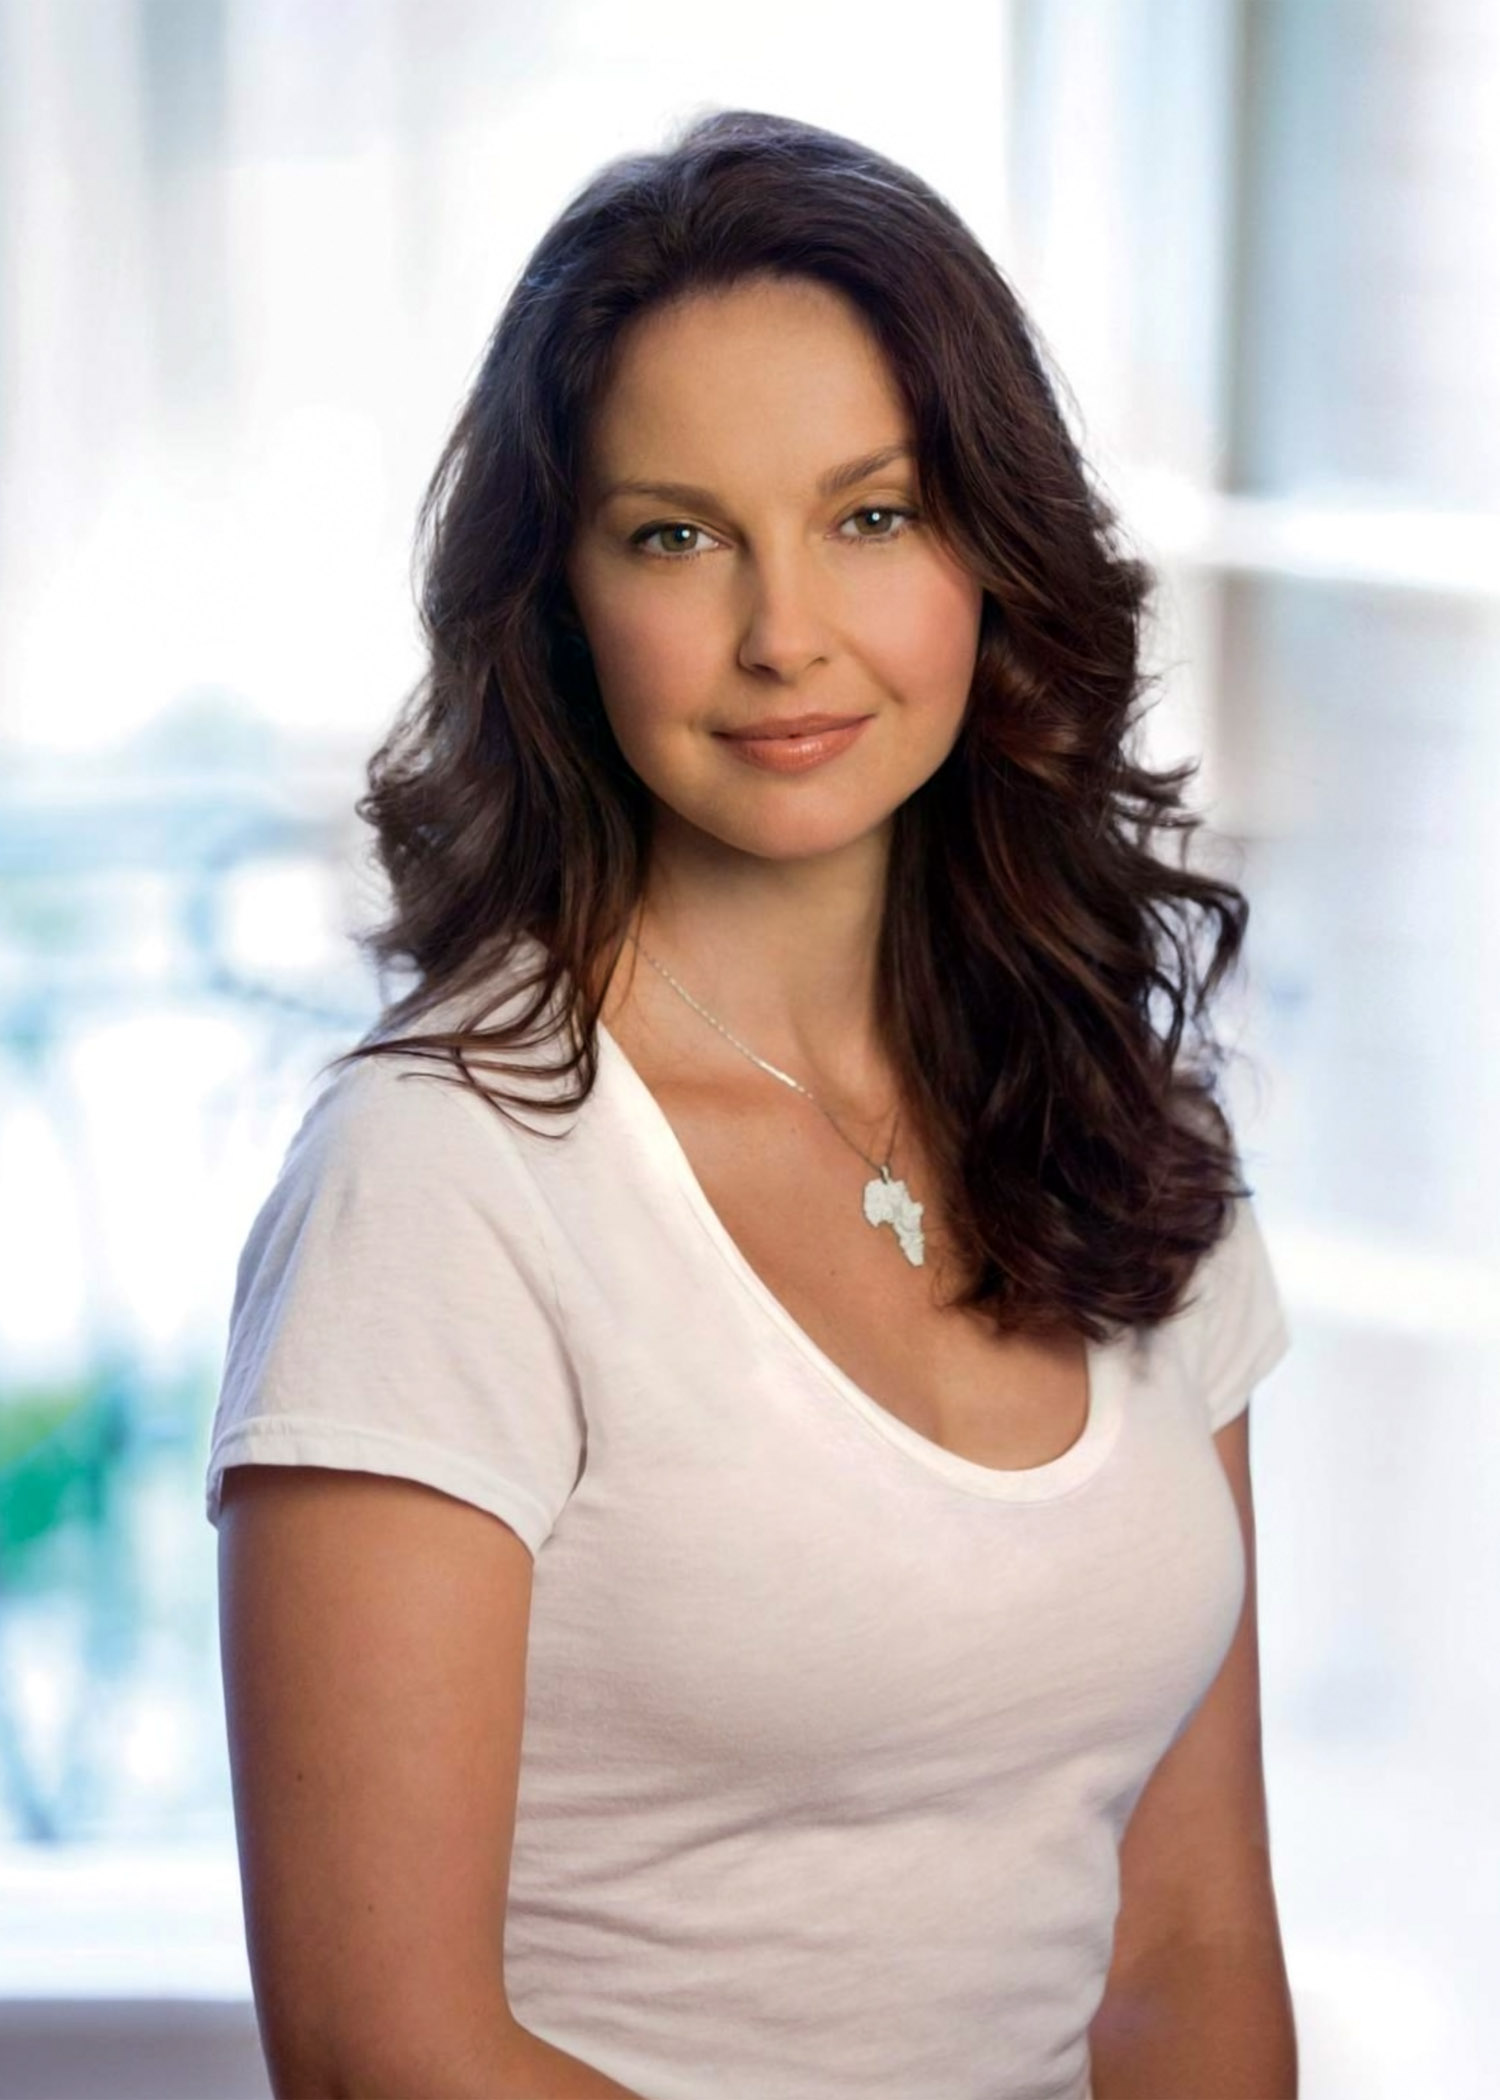 Ashley Judd Plastic Surgery ��� Denied By The Celeb